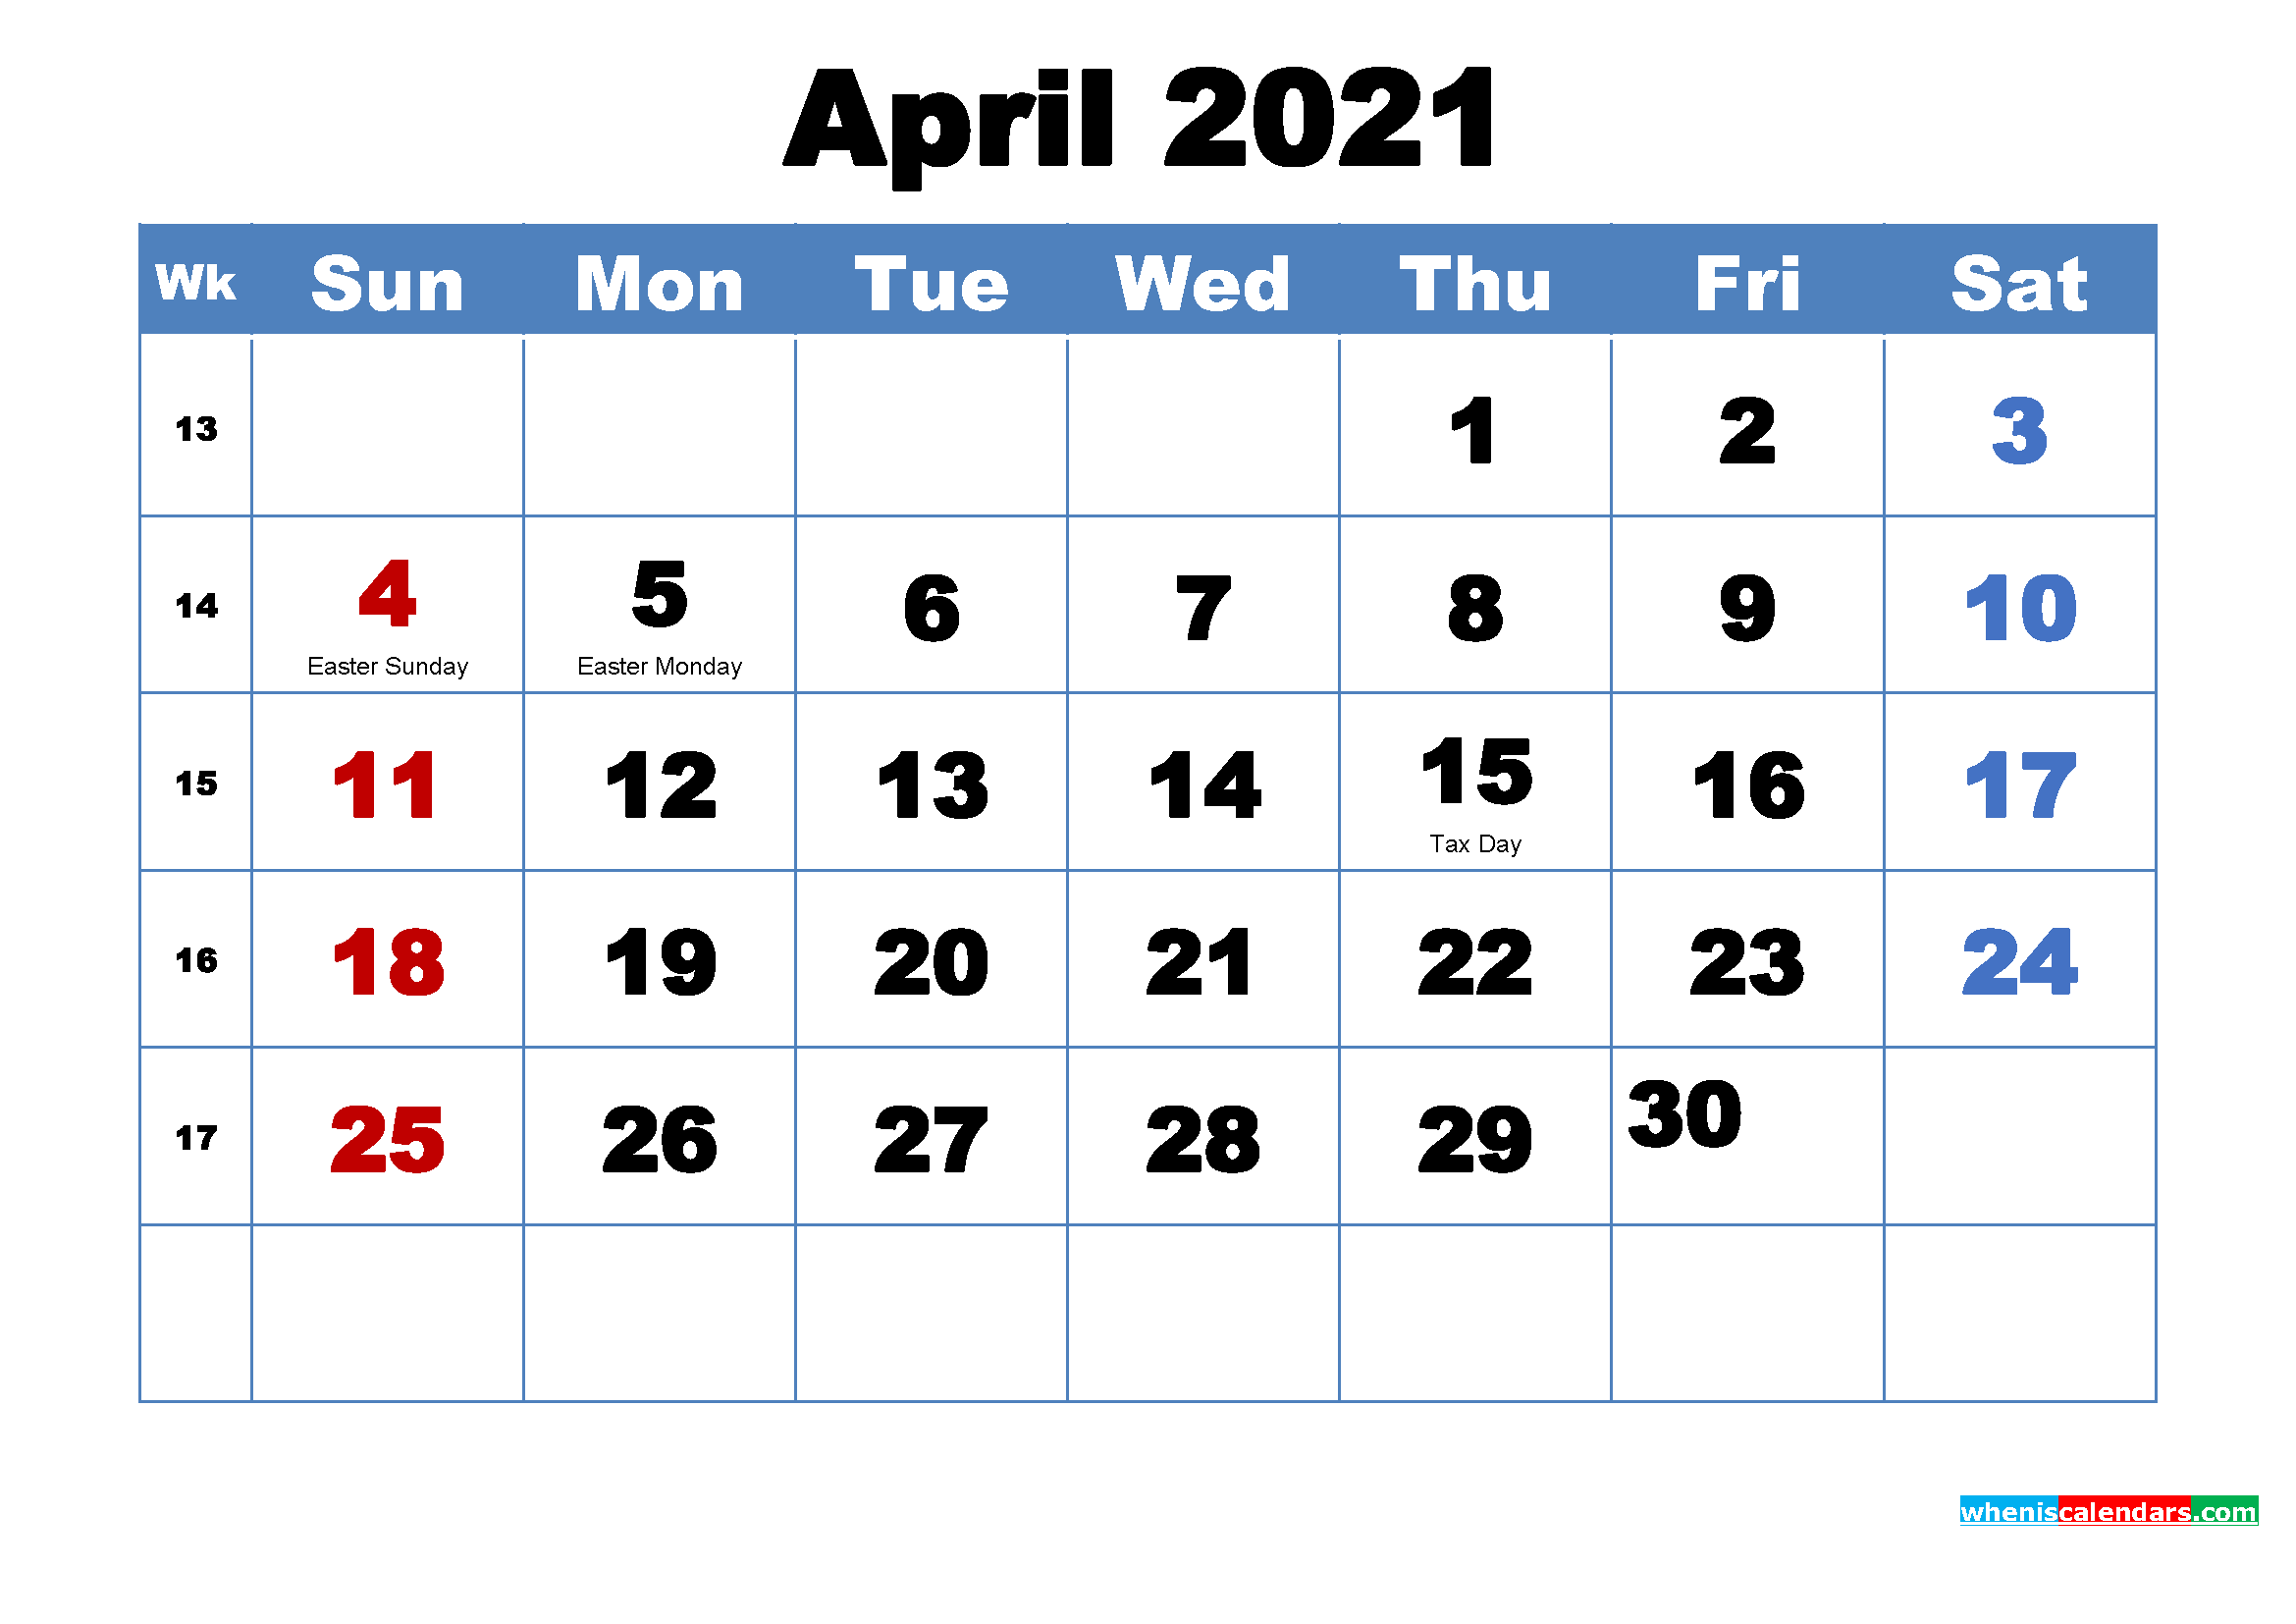 April 2021 Calendar Wallpaper Free Download - Free ...